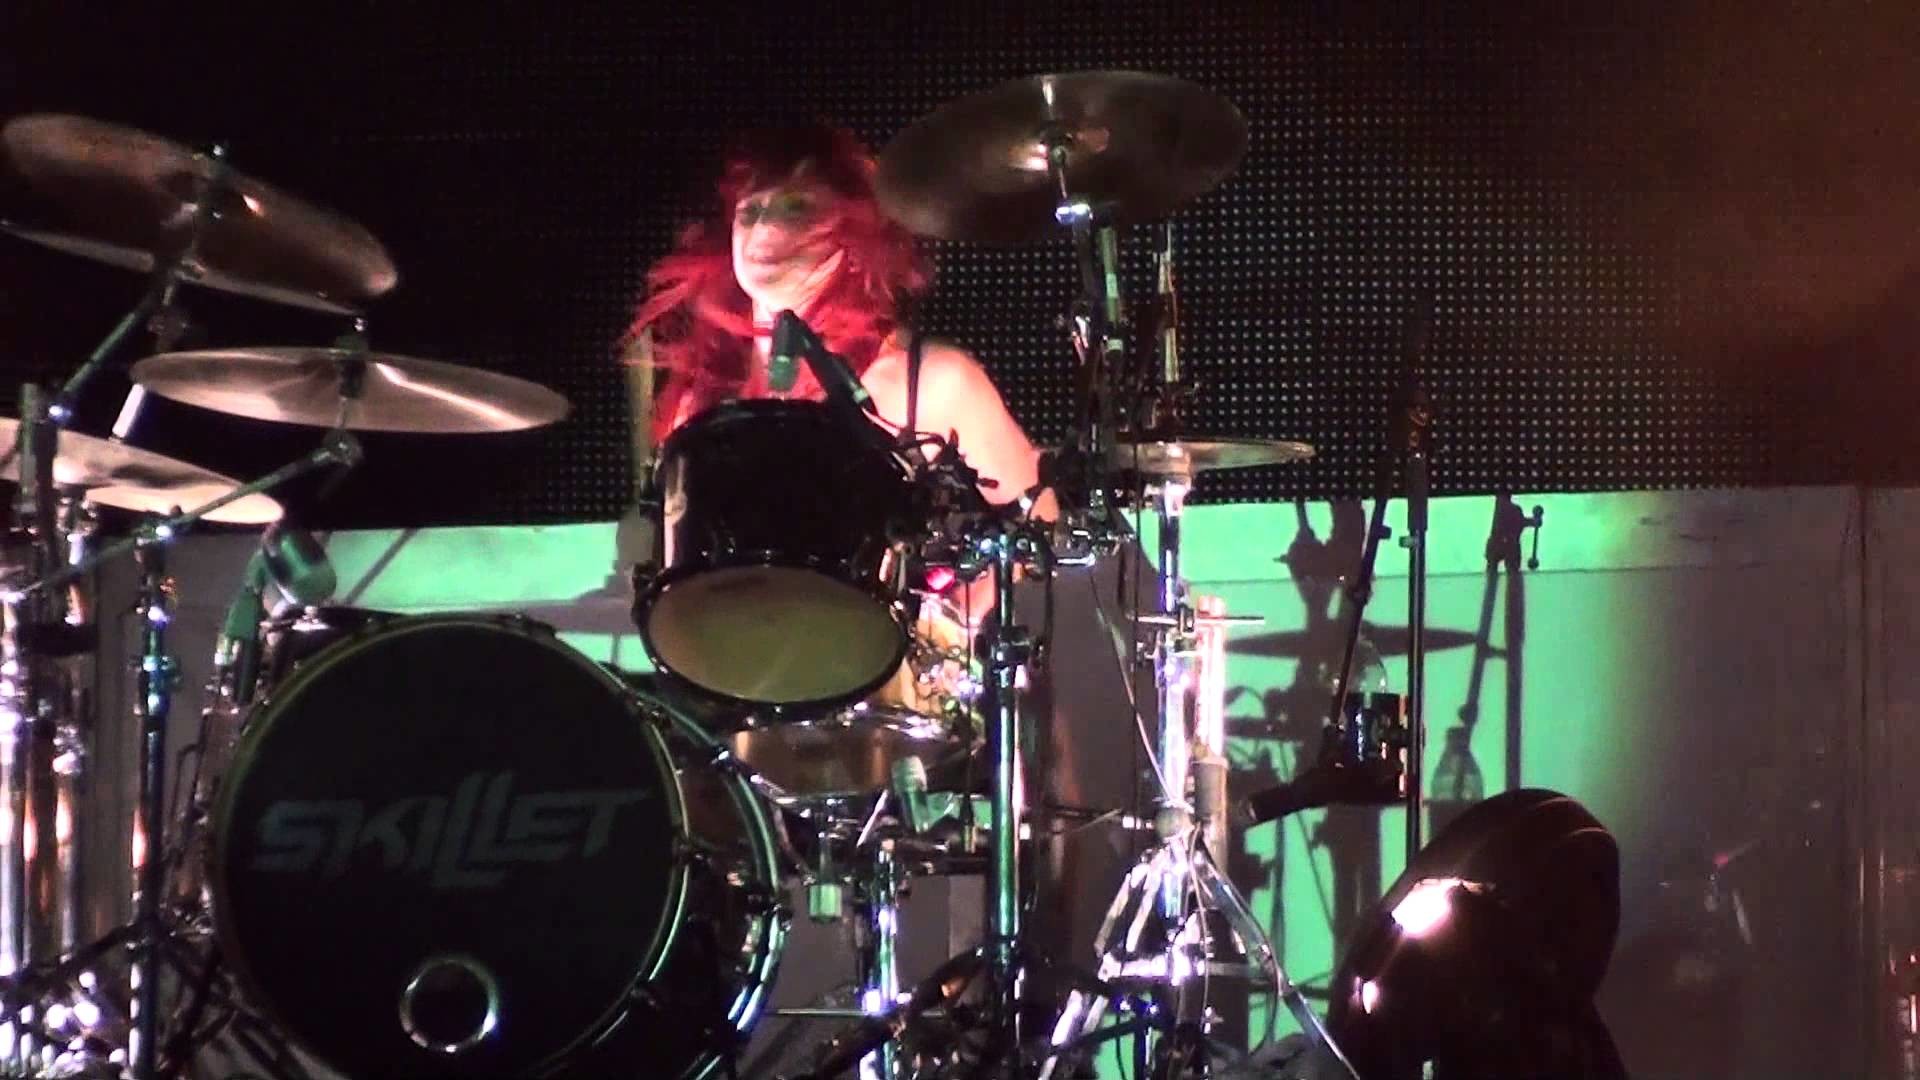 1920x1080 Skillet - Jen Ledger (Drum) Solo - New Show! - HD Video! - Live @ Kingsfest  2013 - YouTube